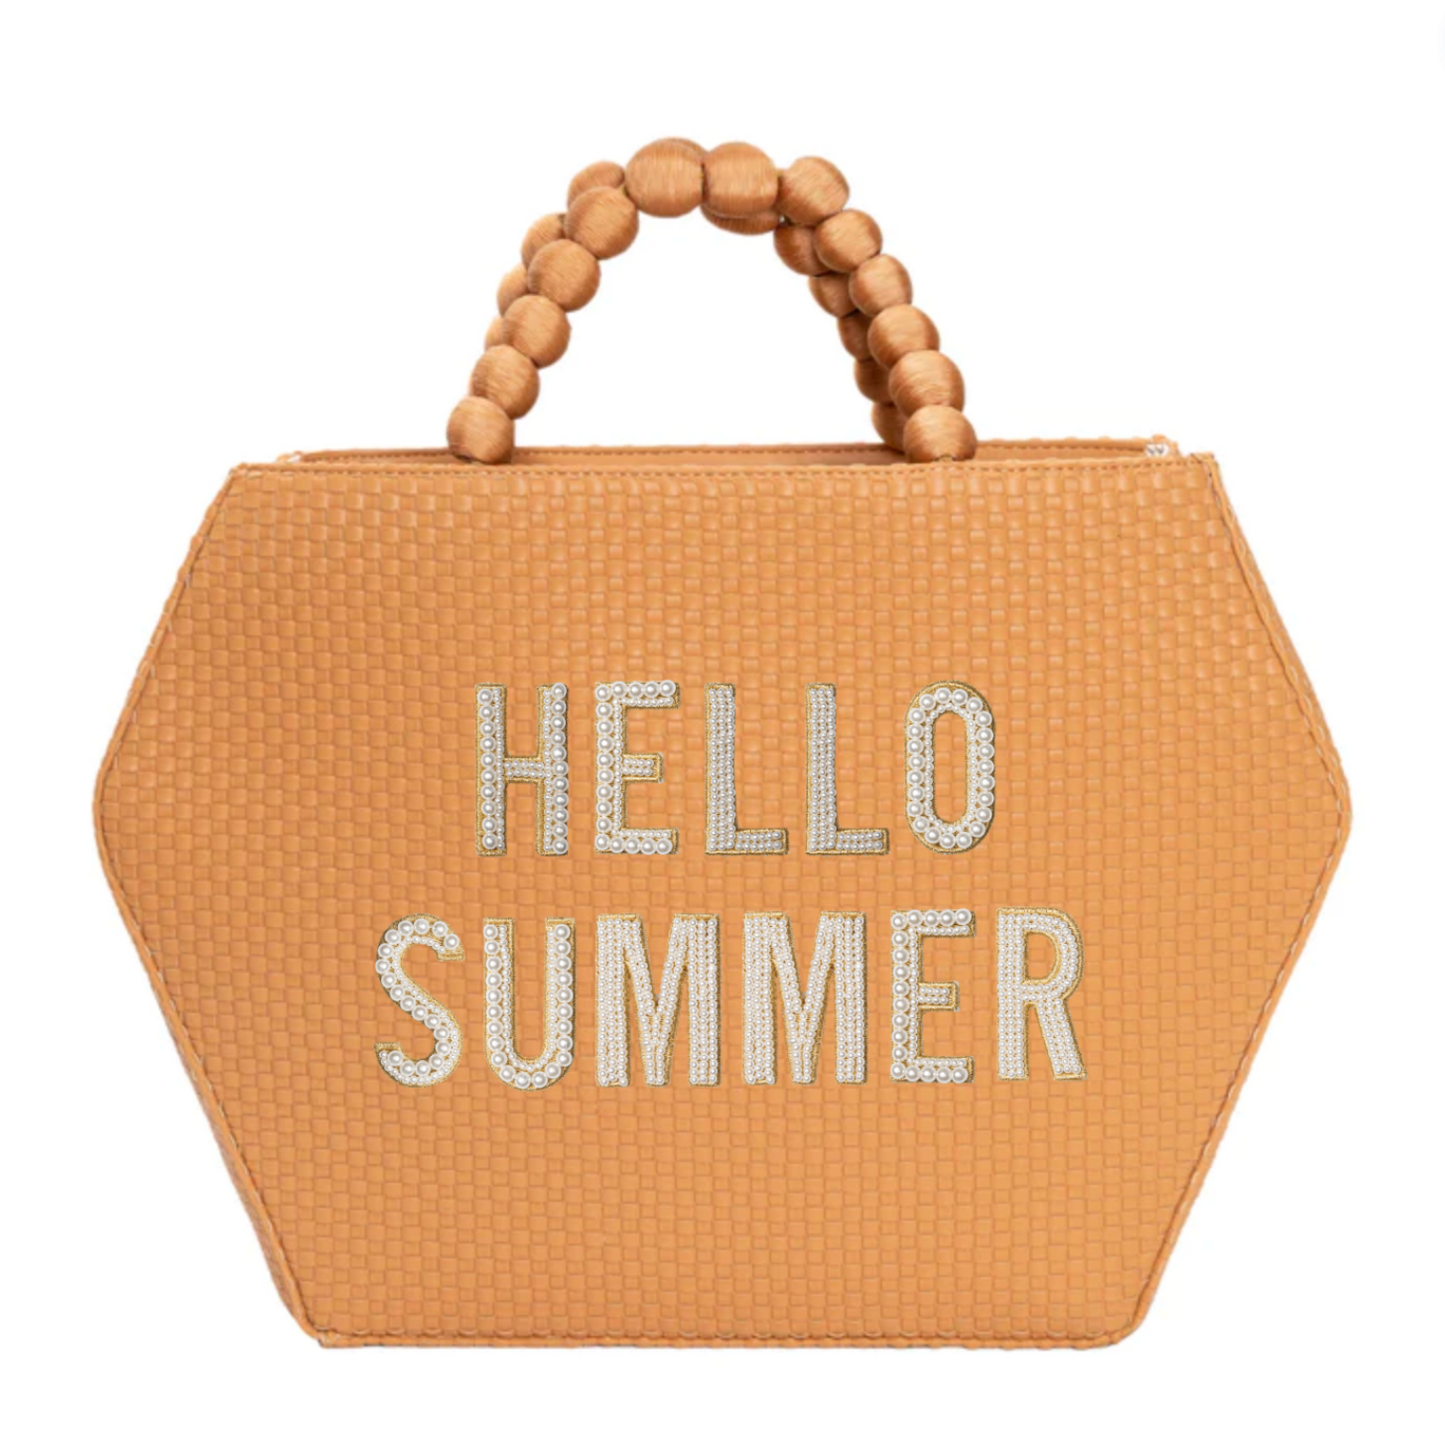 Hello Summer Tote Bag